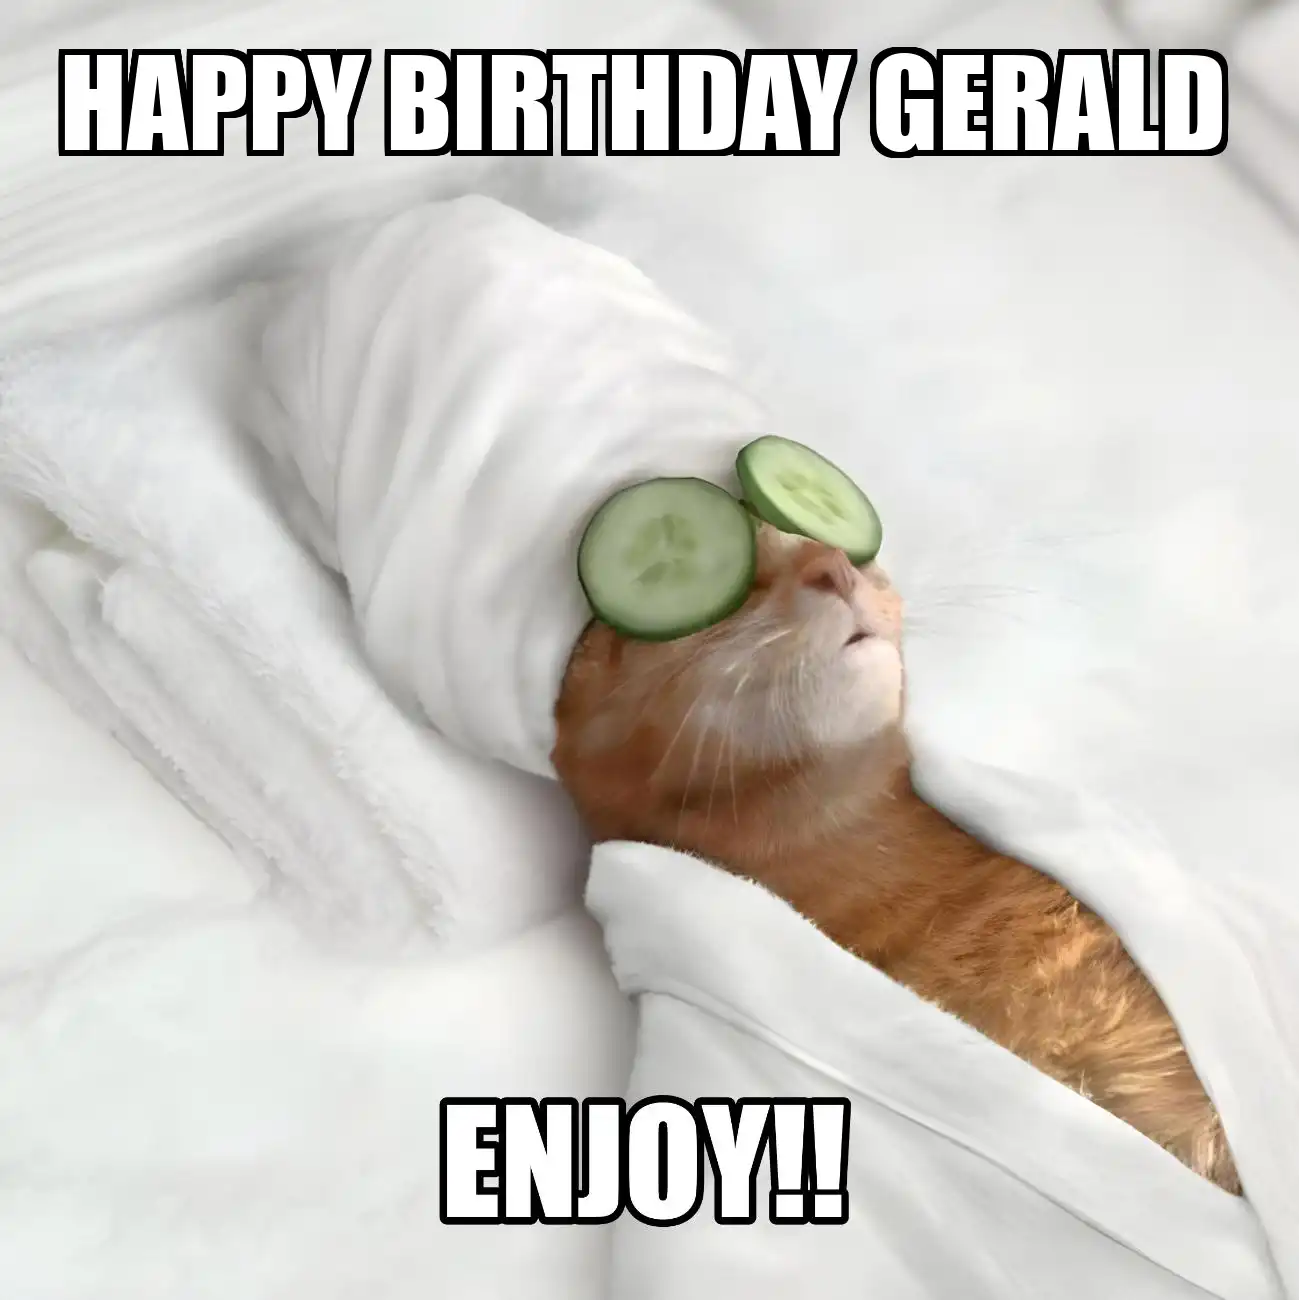 Happy Birthday Gerald Enjoy Cat Meme